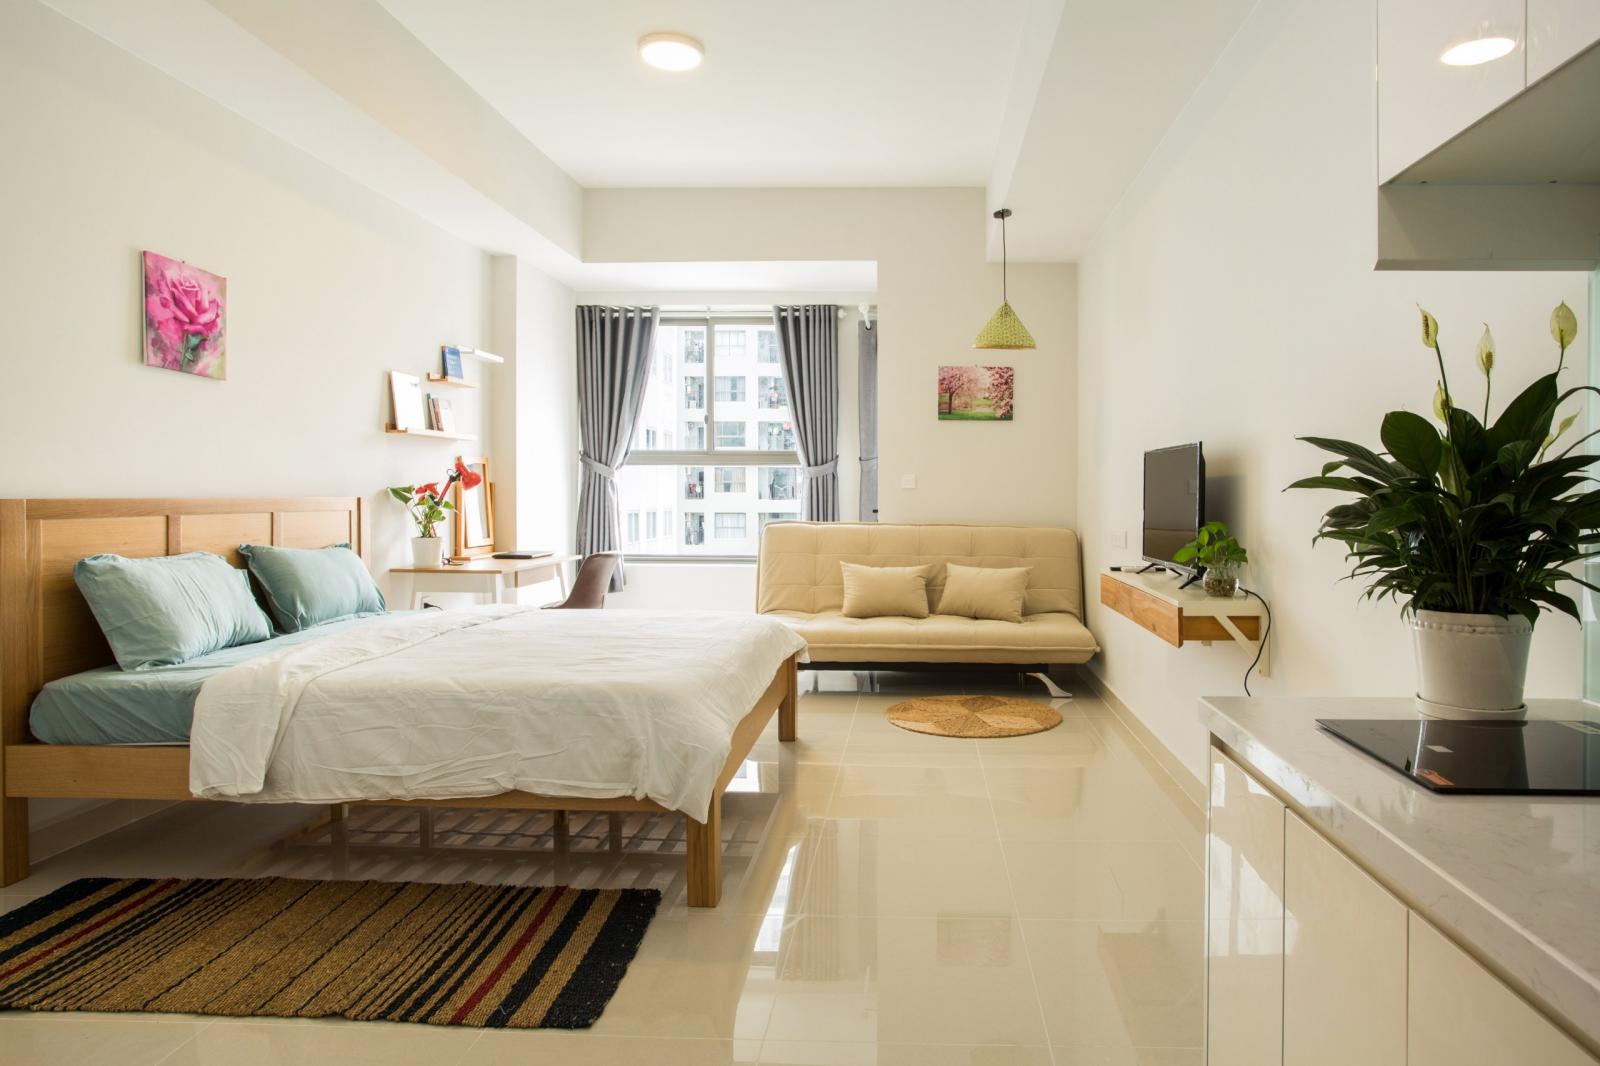 FULL Nội thất cho thuê căn hộ Mini cao cấp Botanica Premier